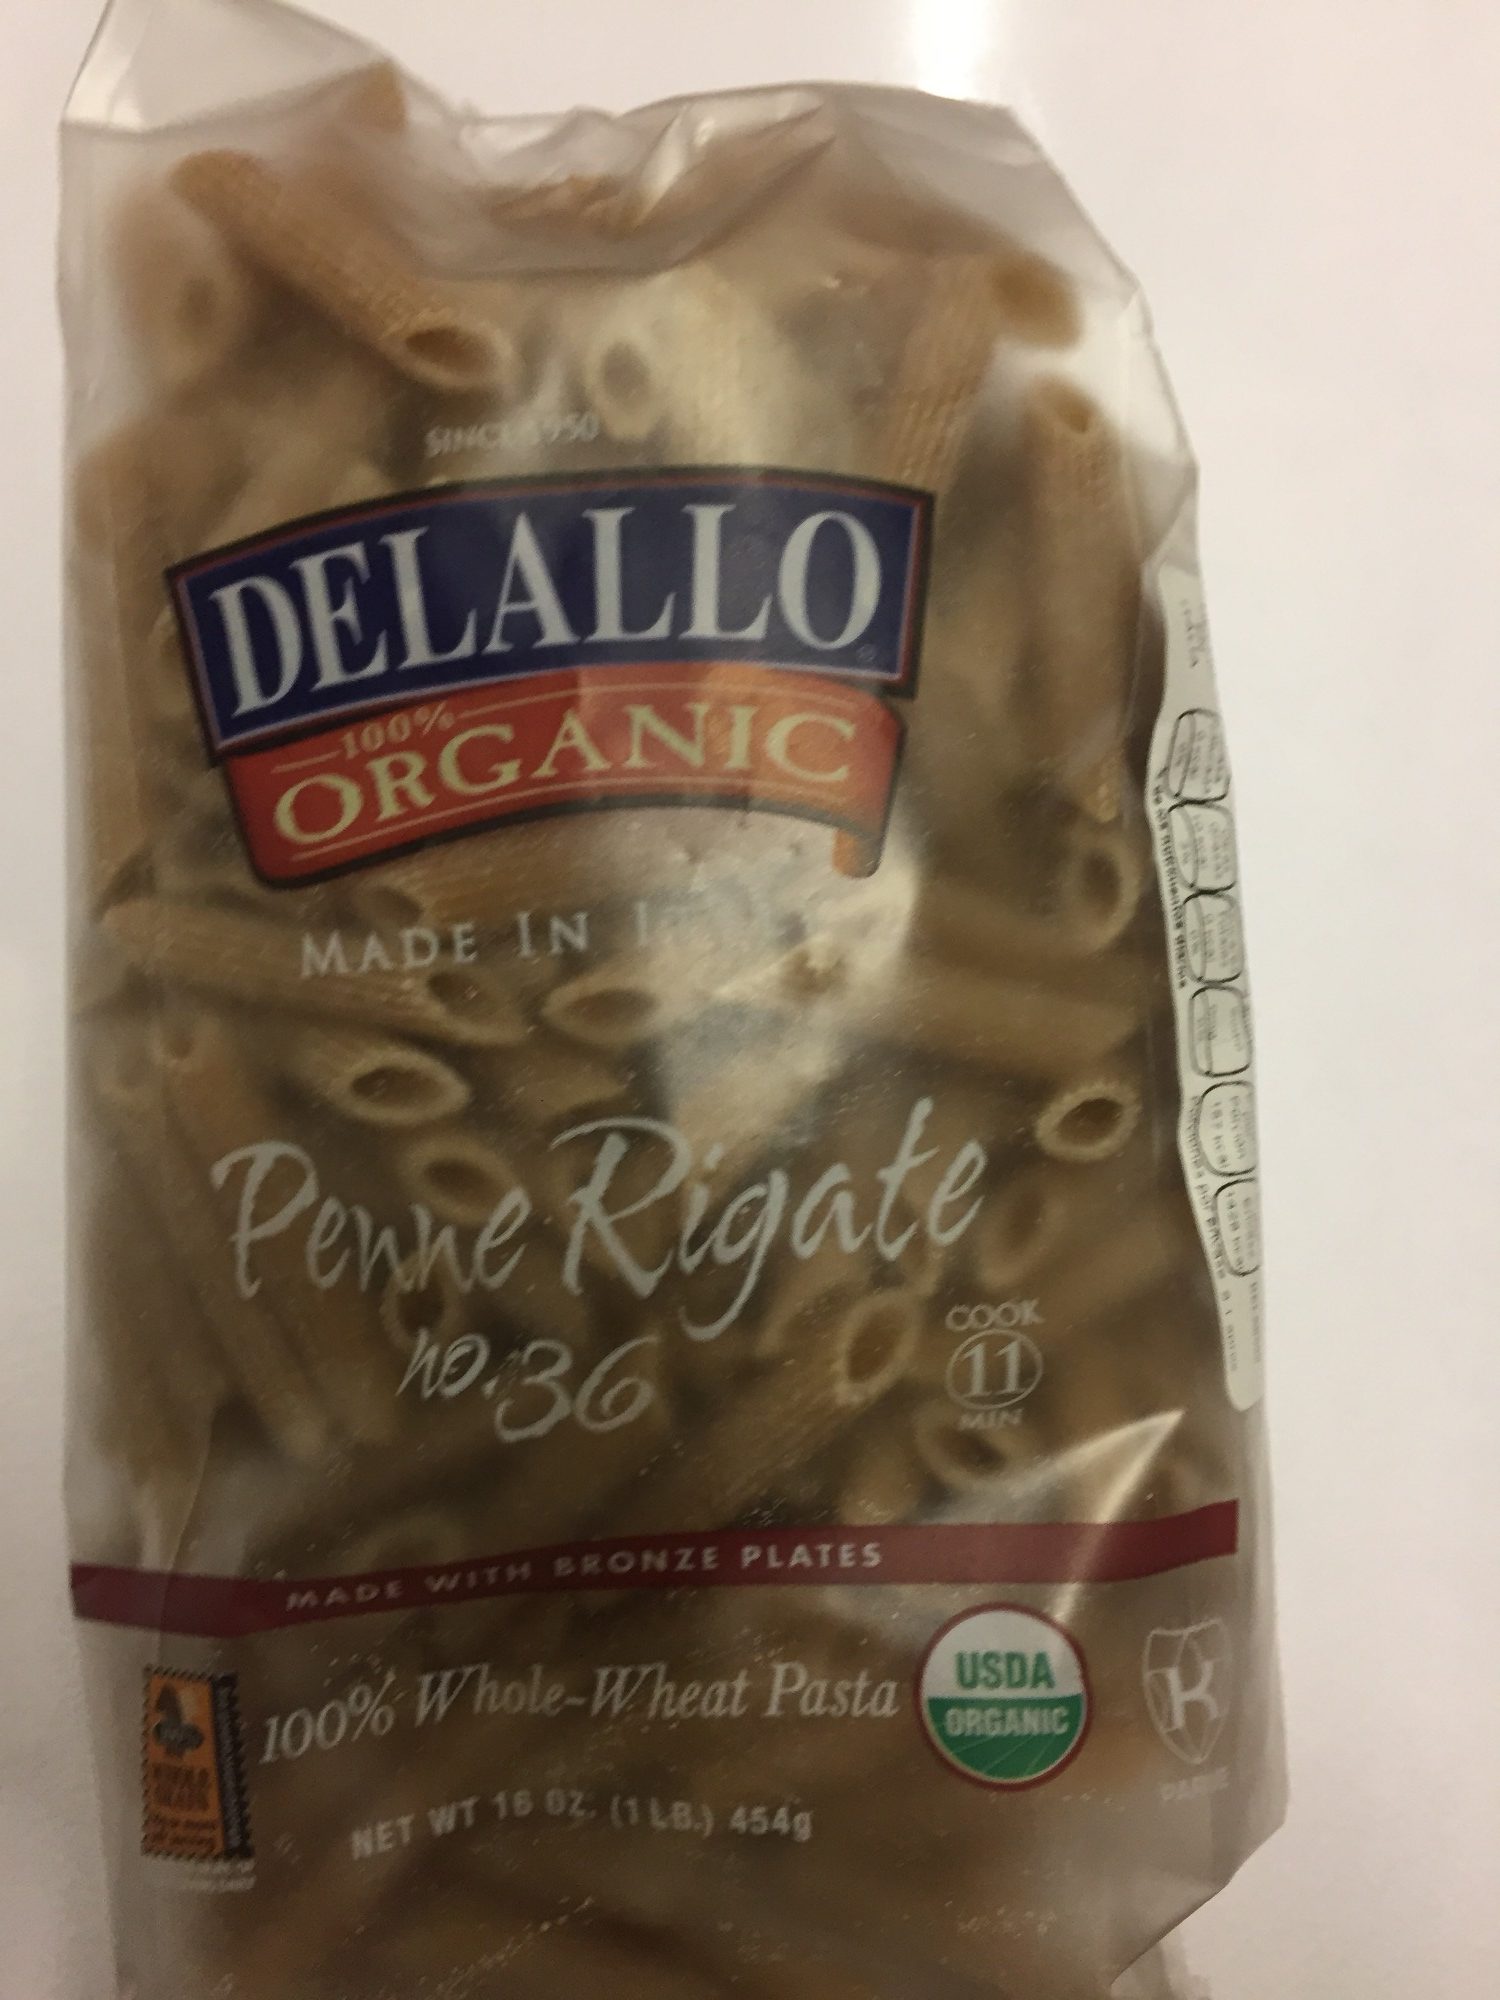 Penne rigate no. 36, 100% whole wheat pasta - Producto